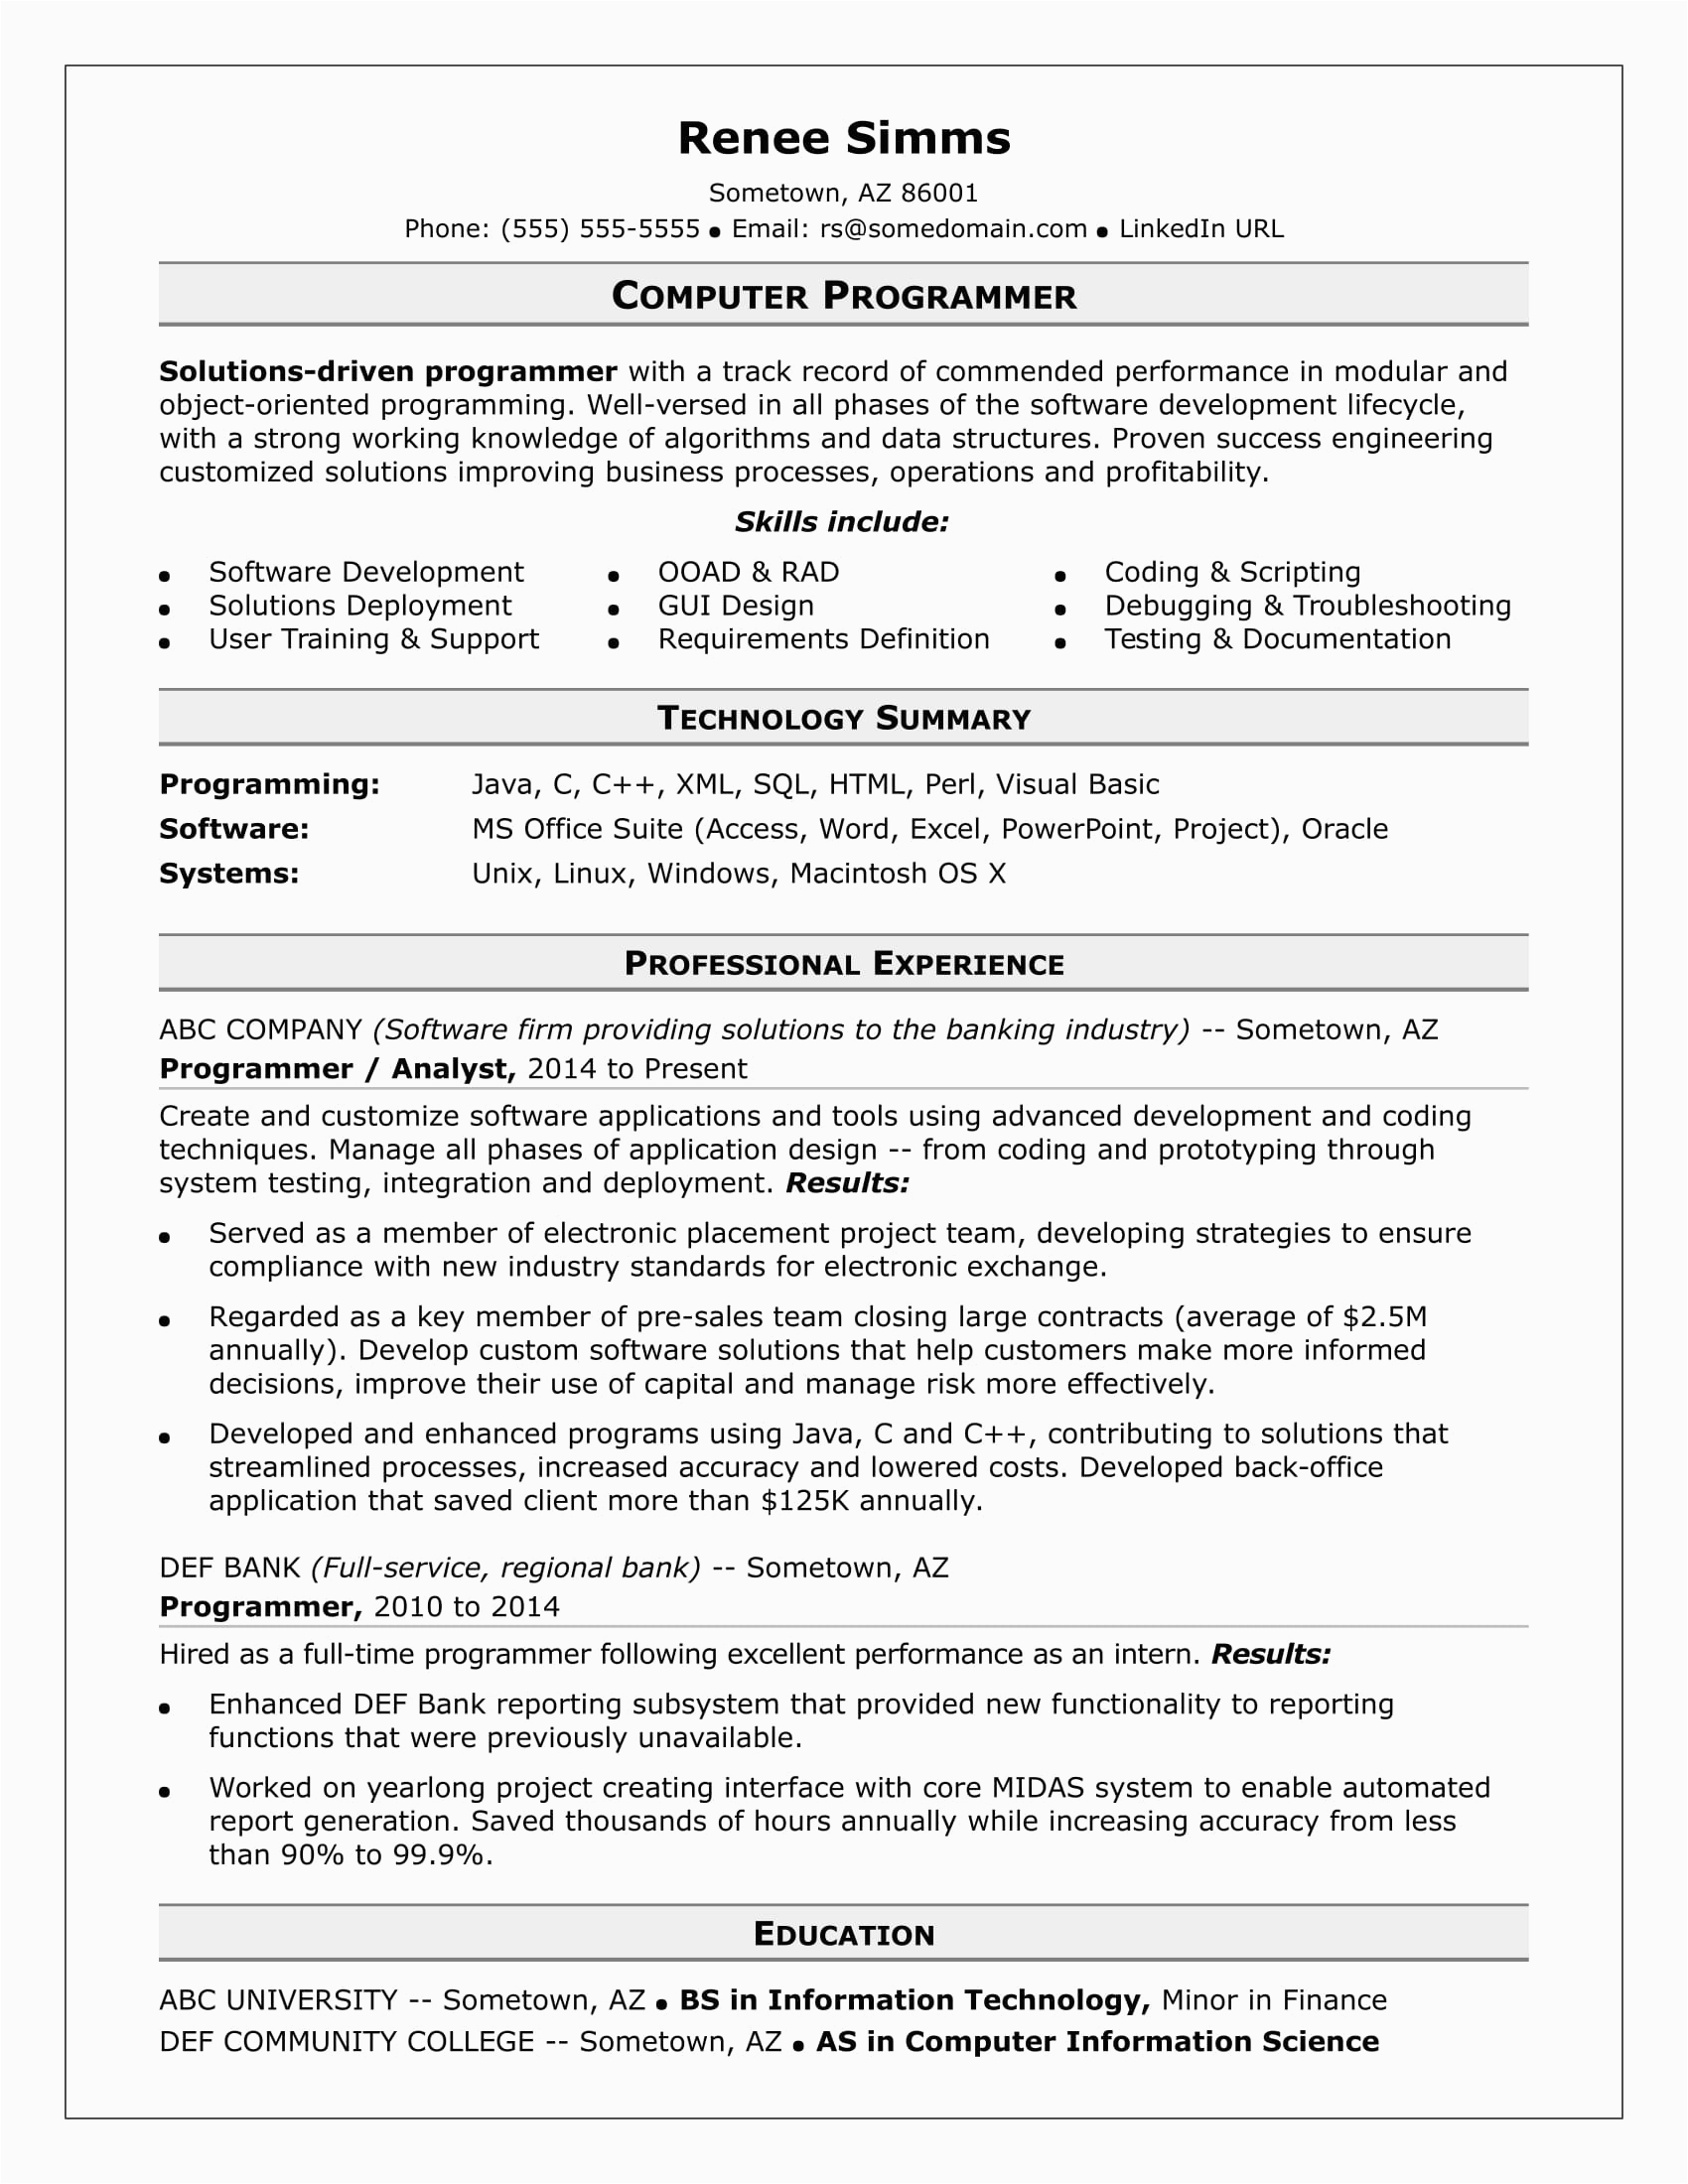 Sample College Graduate Resume In Computer Programming Sample Resume for A Midlevel Puter Programmer